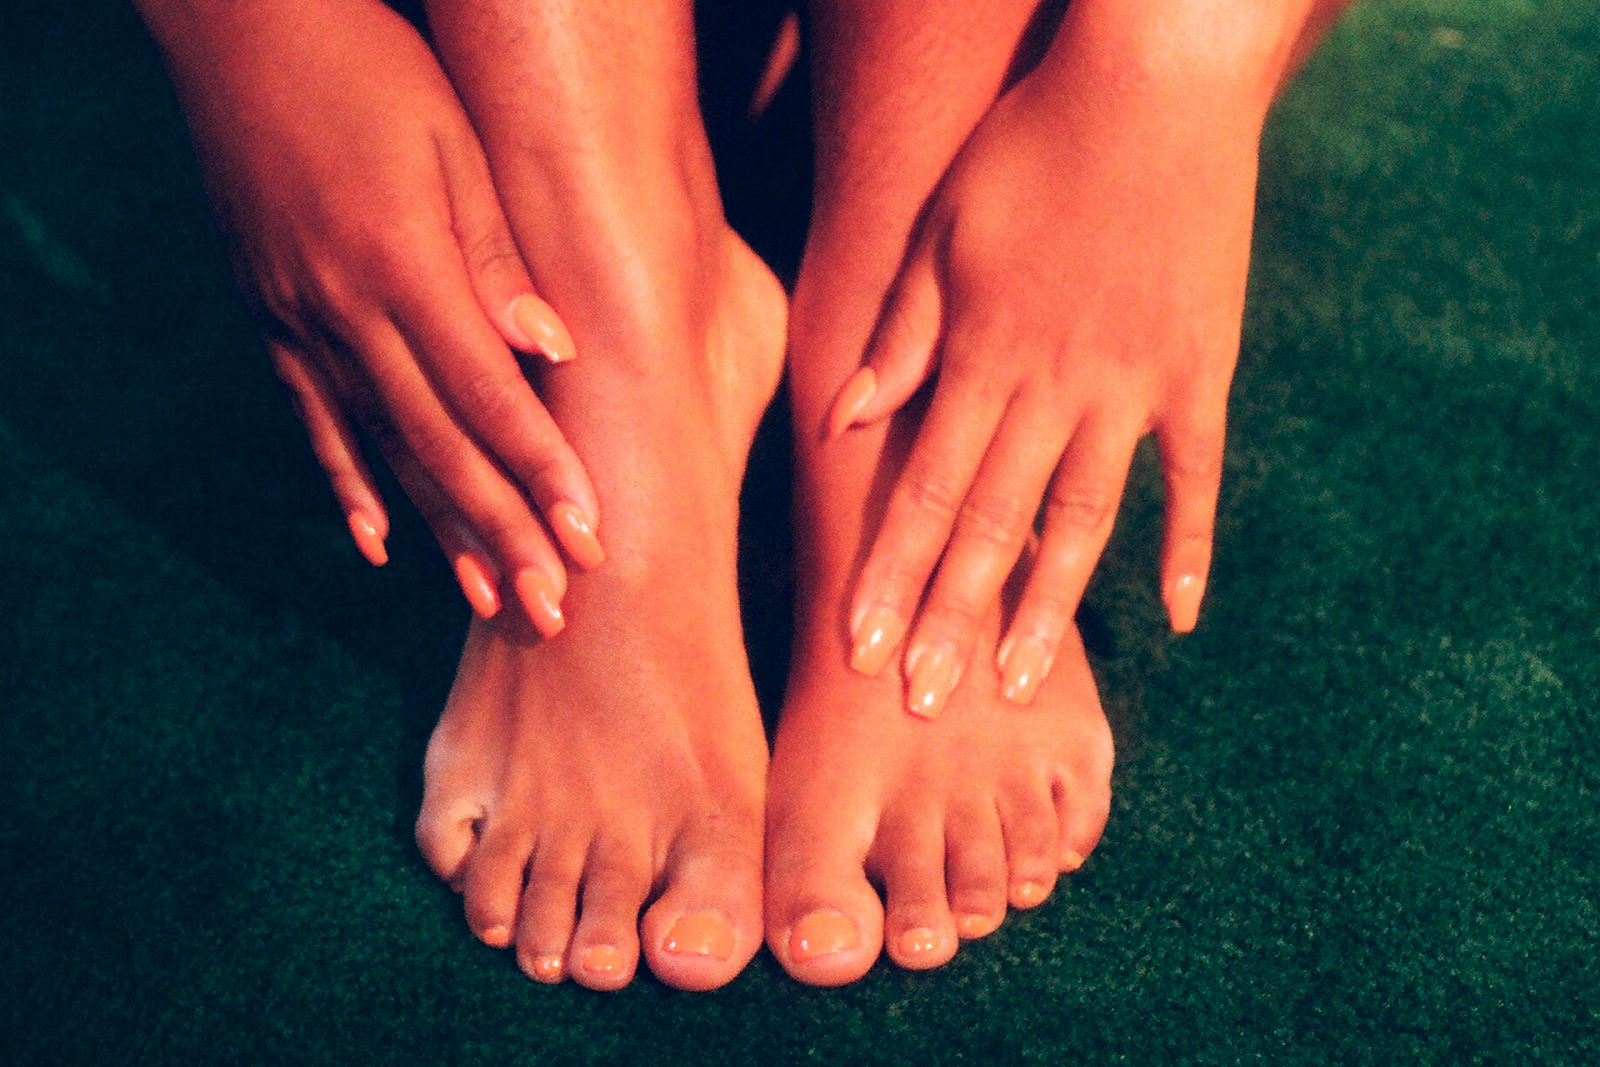 what kills toenail fungus instantly - image of feet in reddish light